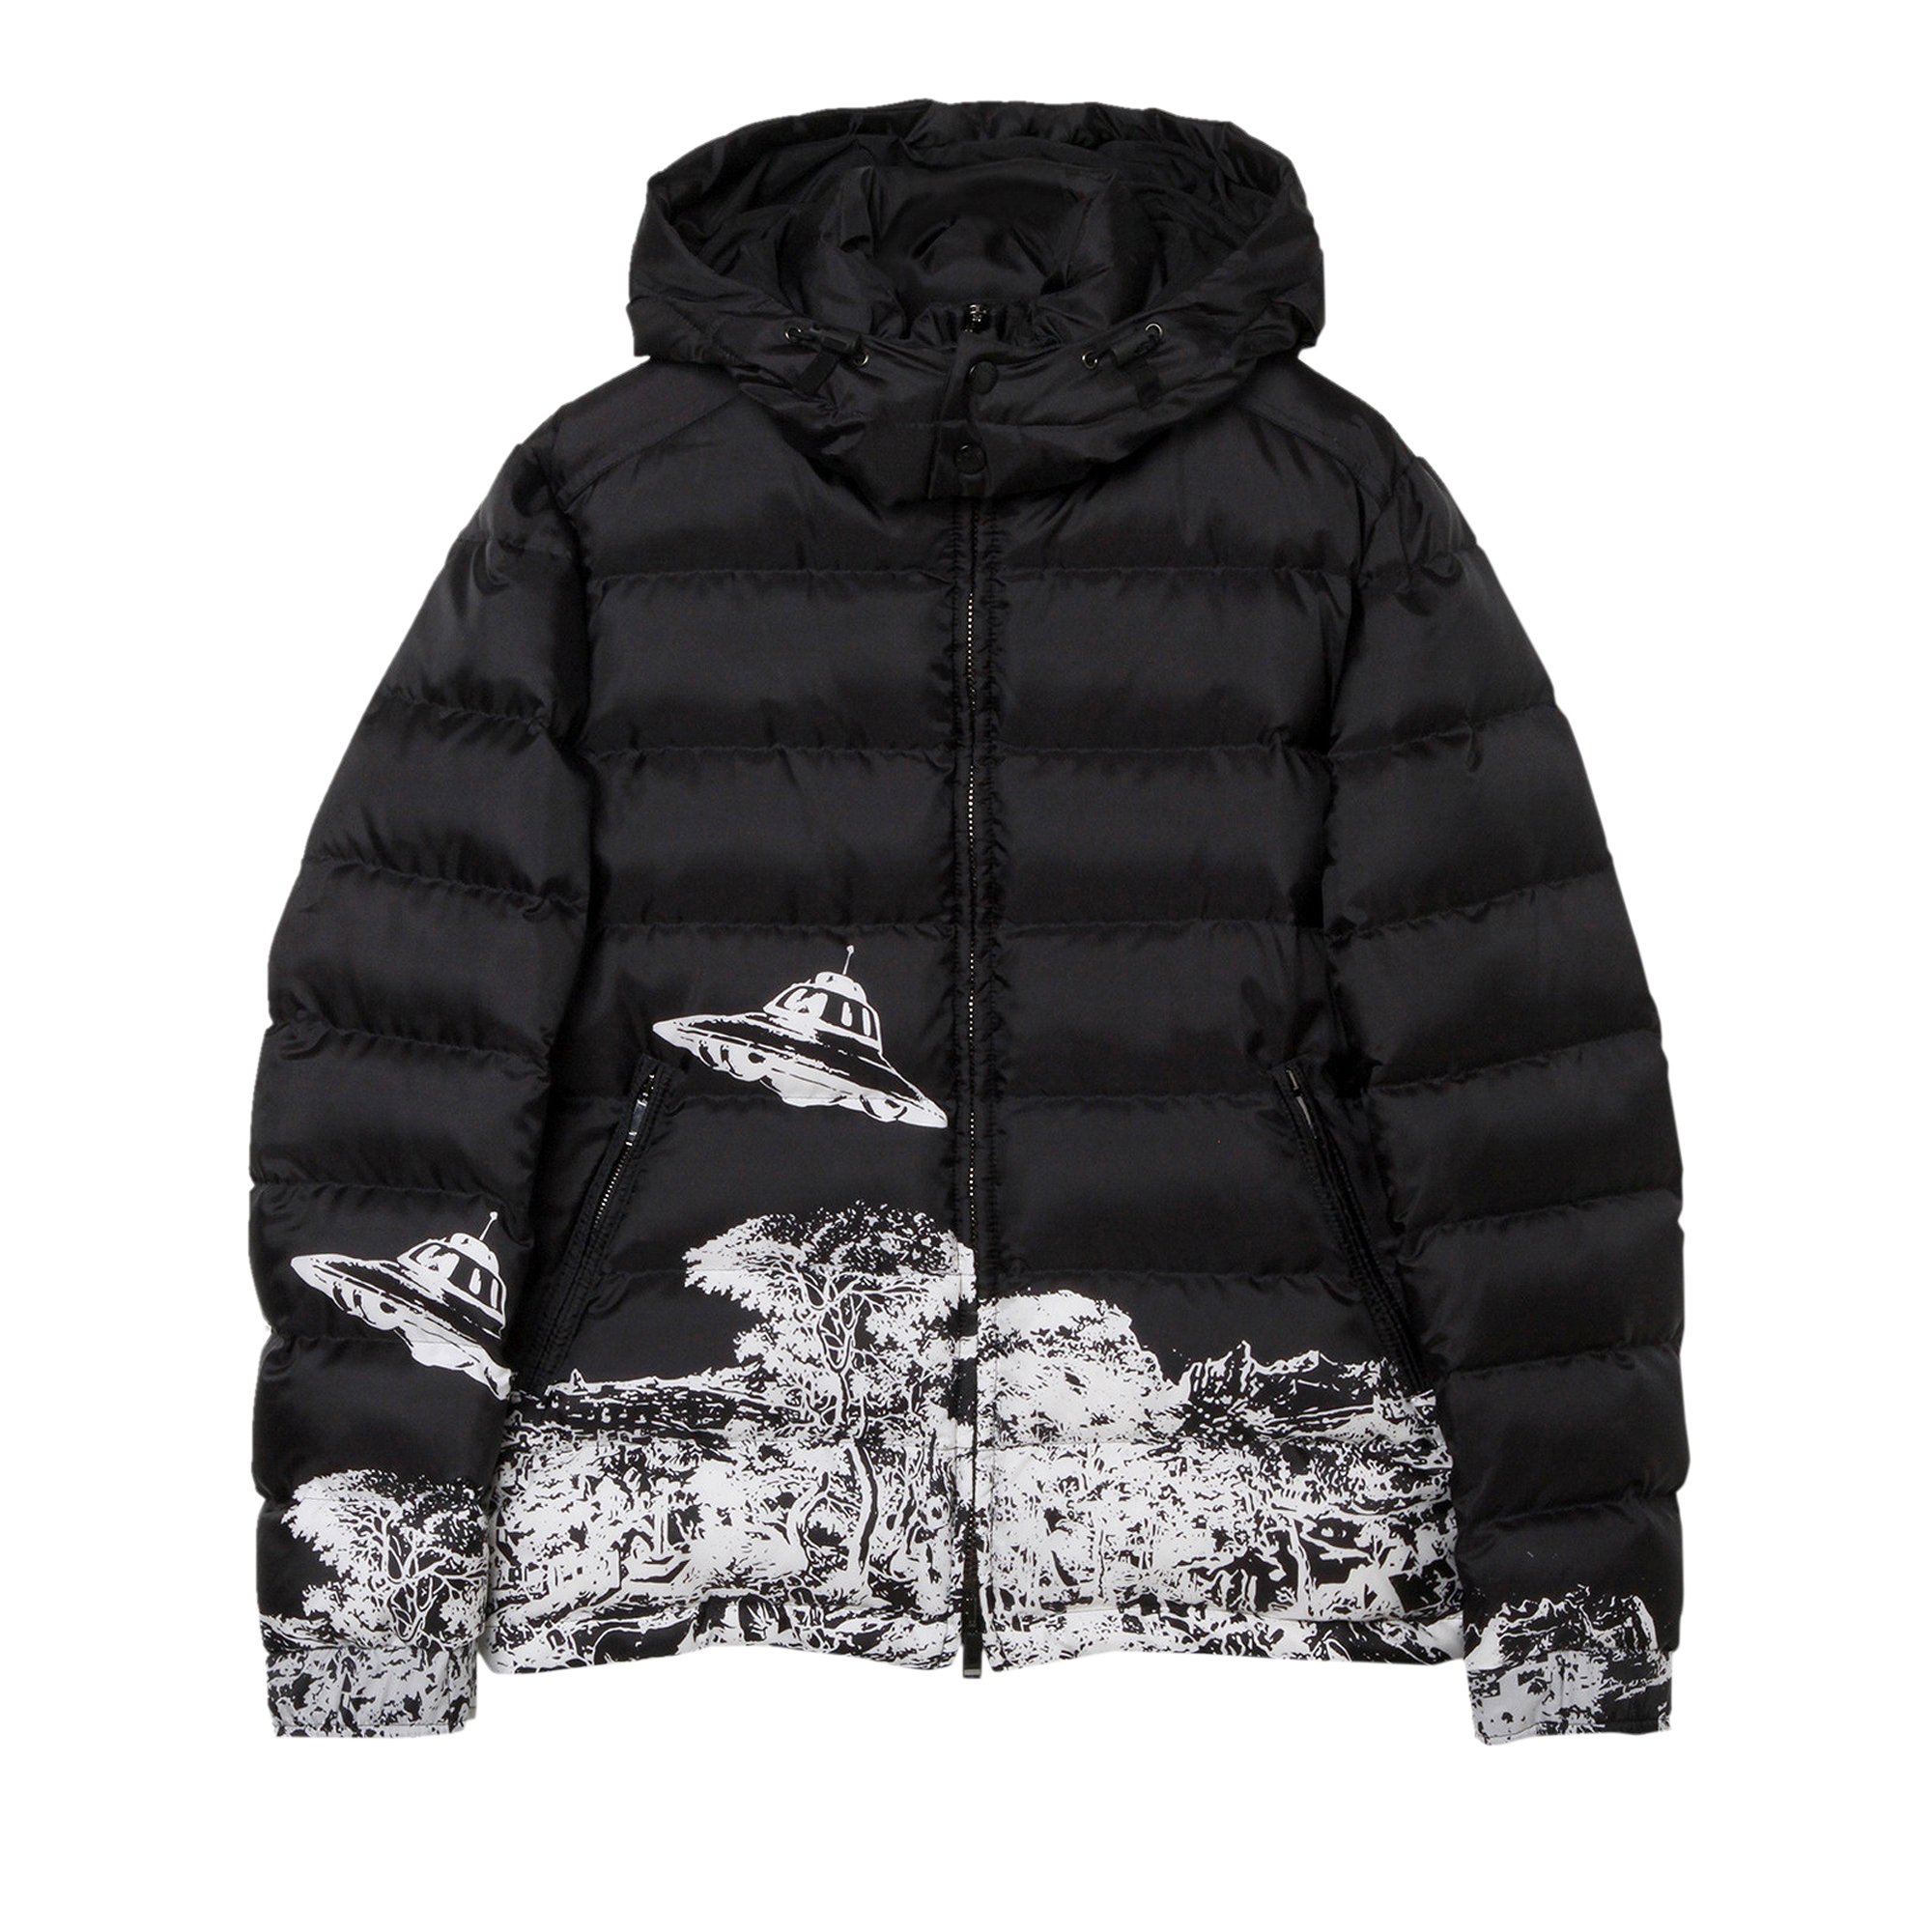 Undercover floral-print hooded jacket - Black